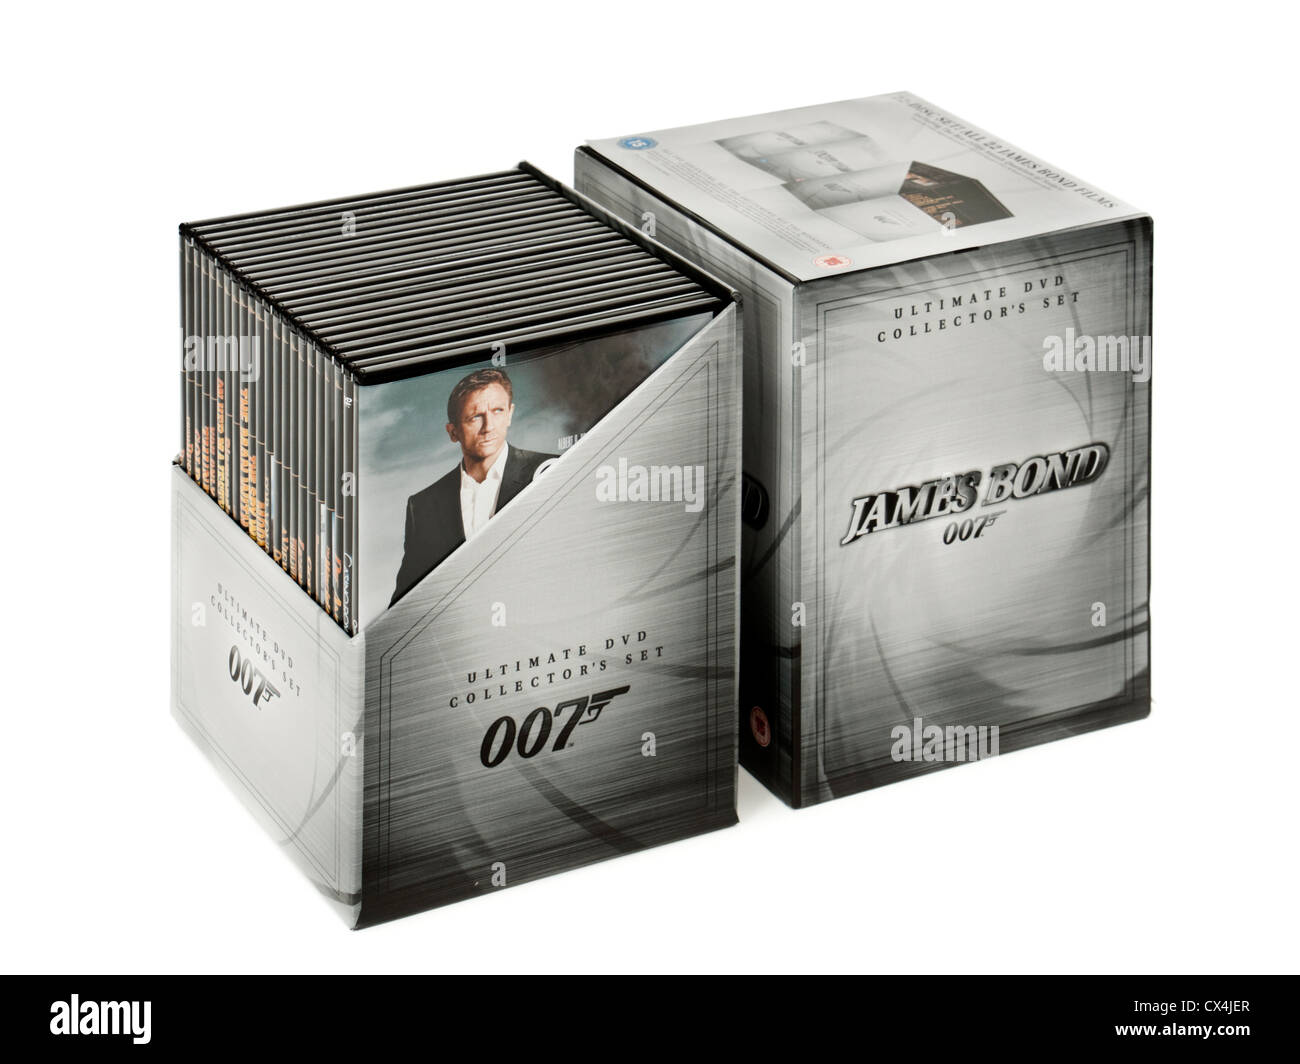 James Bond (007) Ultimate DVD Collector Box-Set Stockfotografie - Alamy